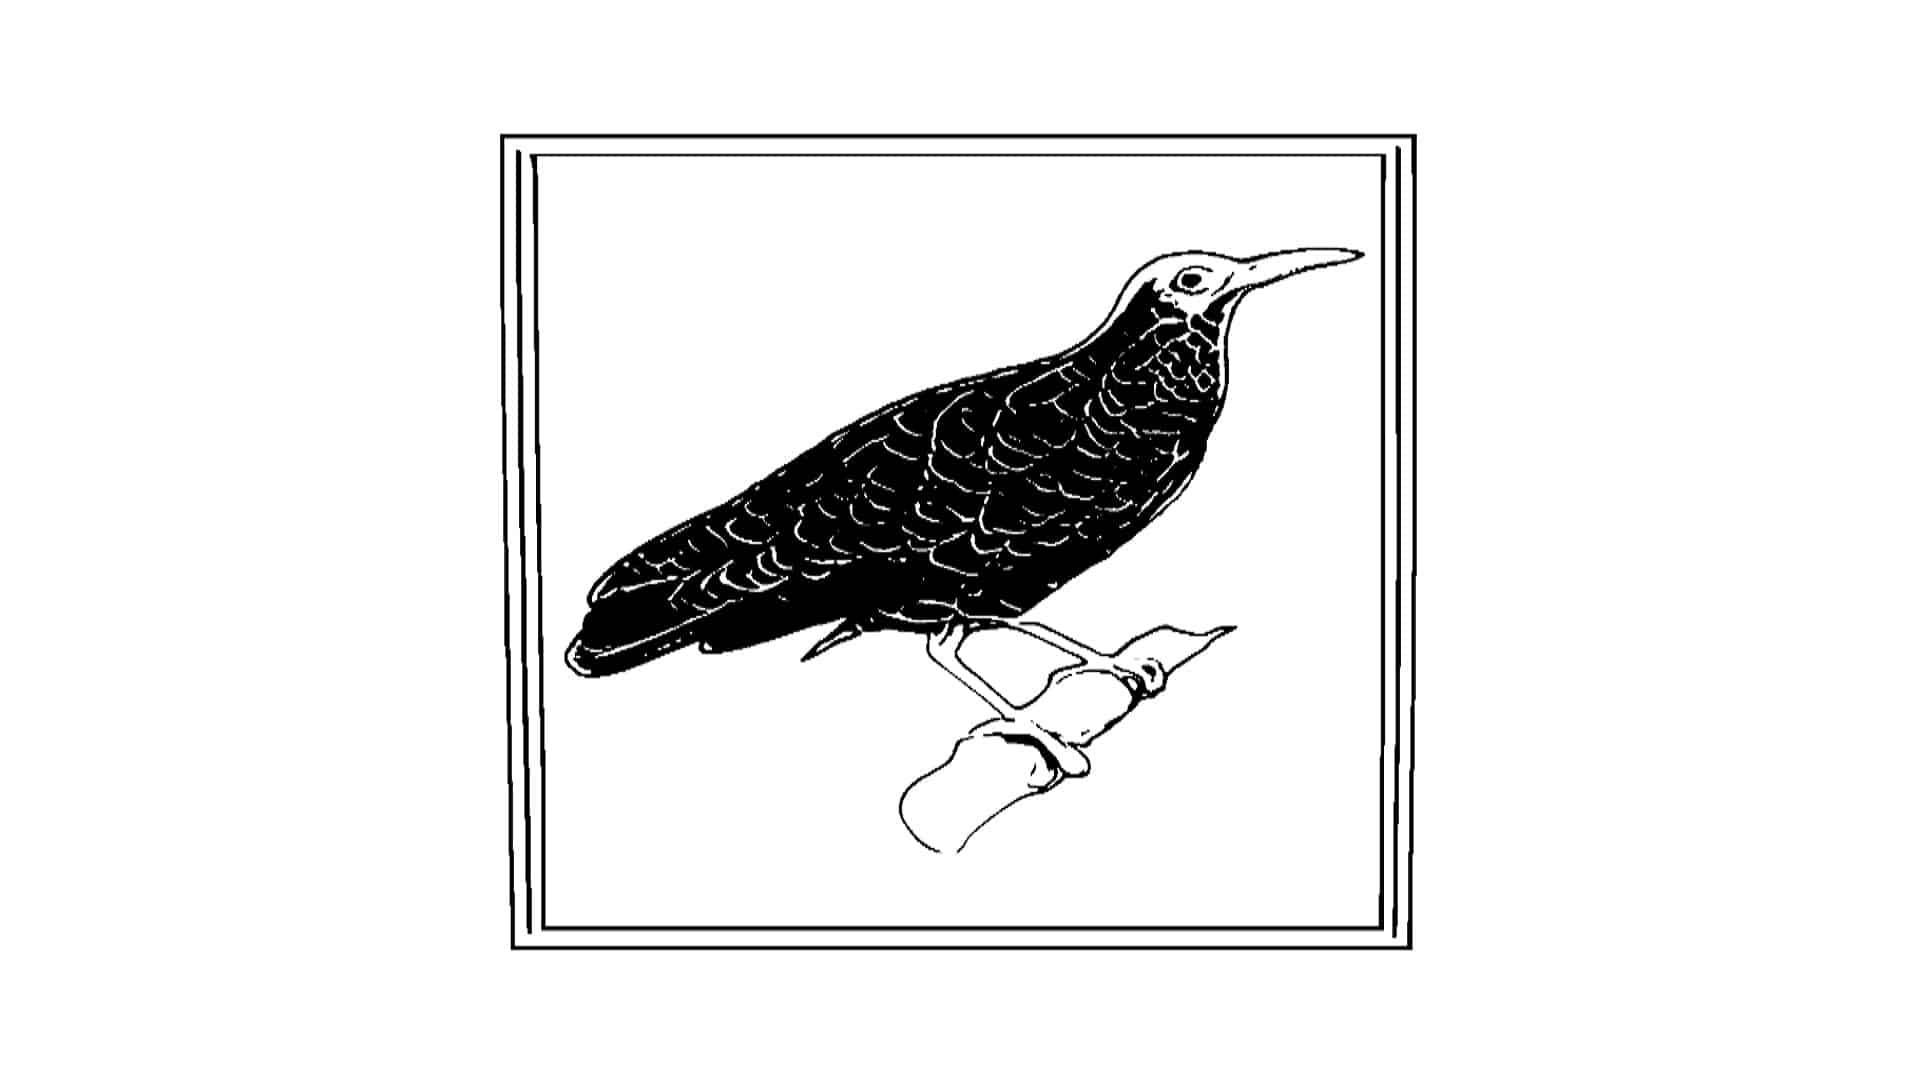 intermorph releases 6 plus minute sprawling masterpiece ‘Birdcage’: Listen